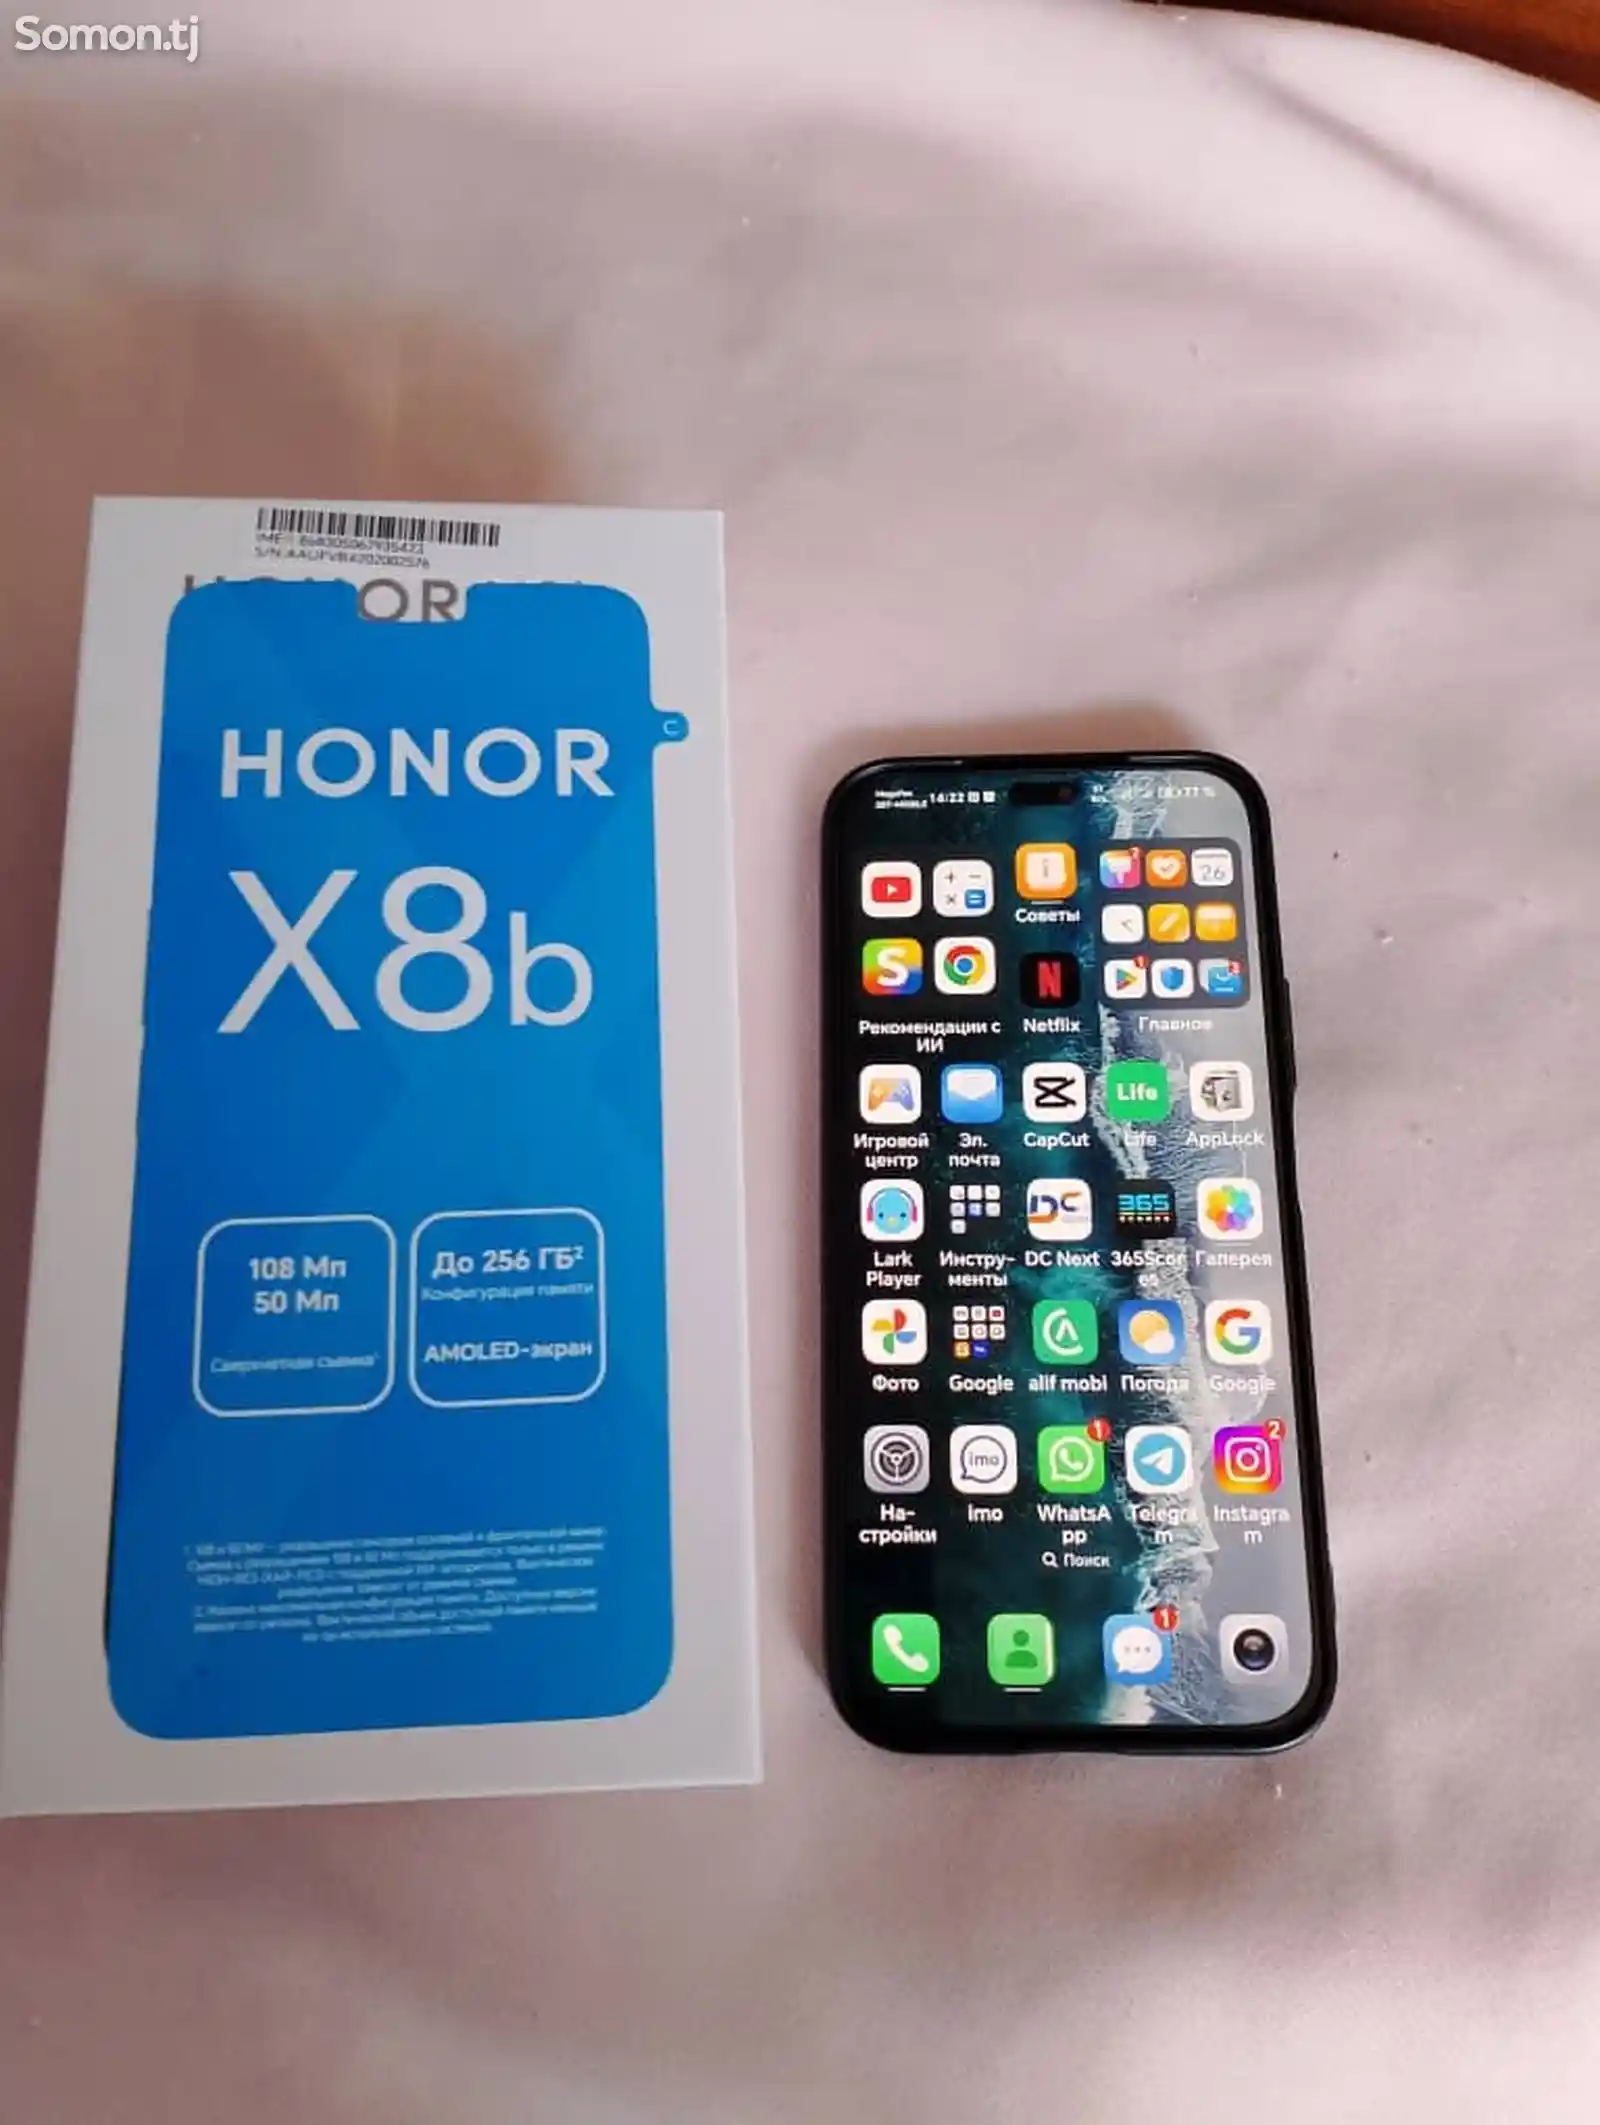 Huawei Honor X8b-4